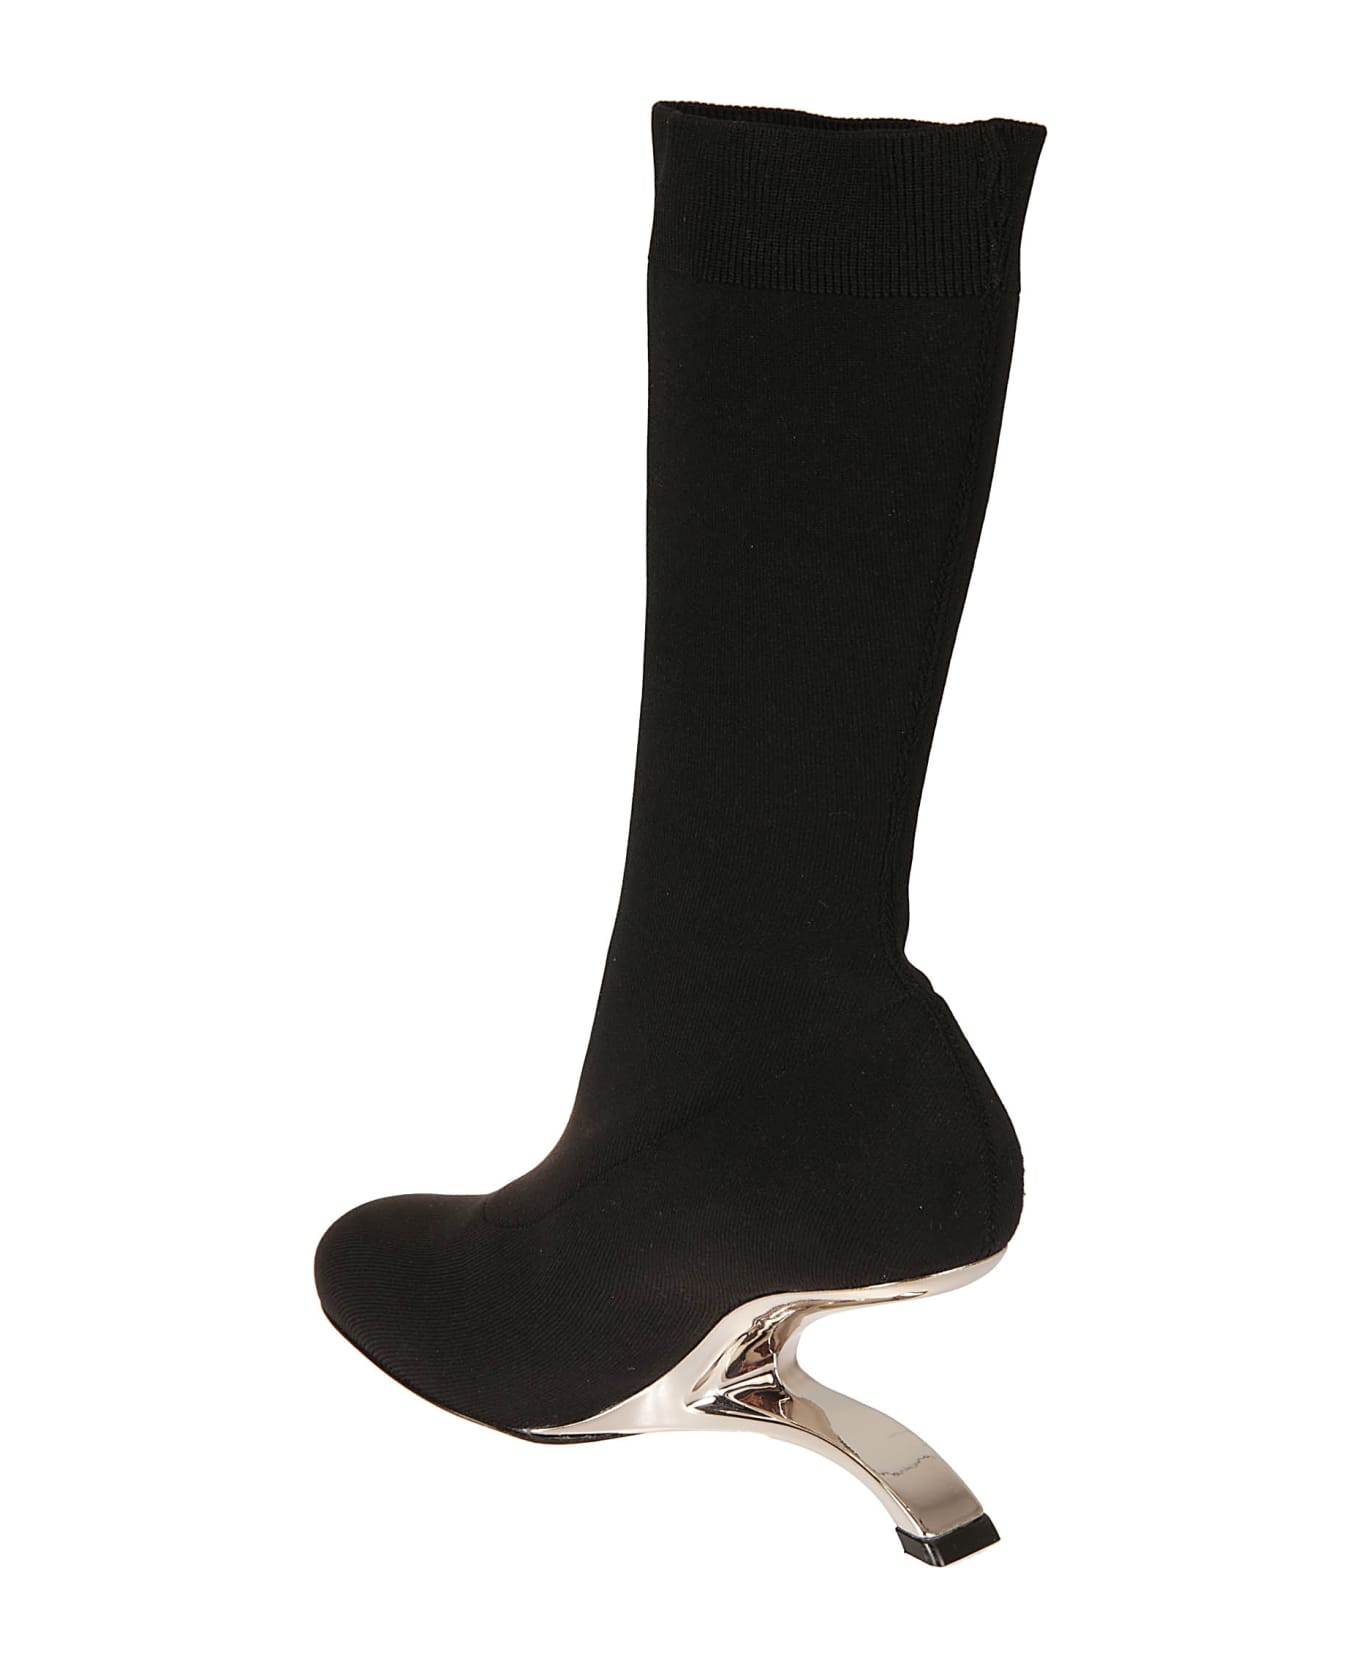 Alexander McQueen Arc Knit Boots - Black/Silver